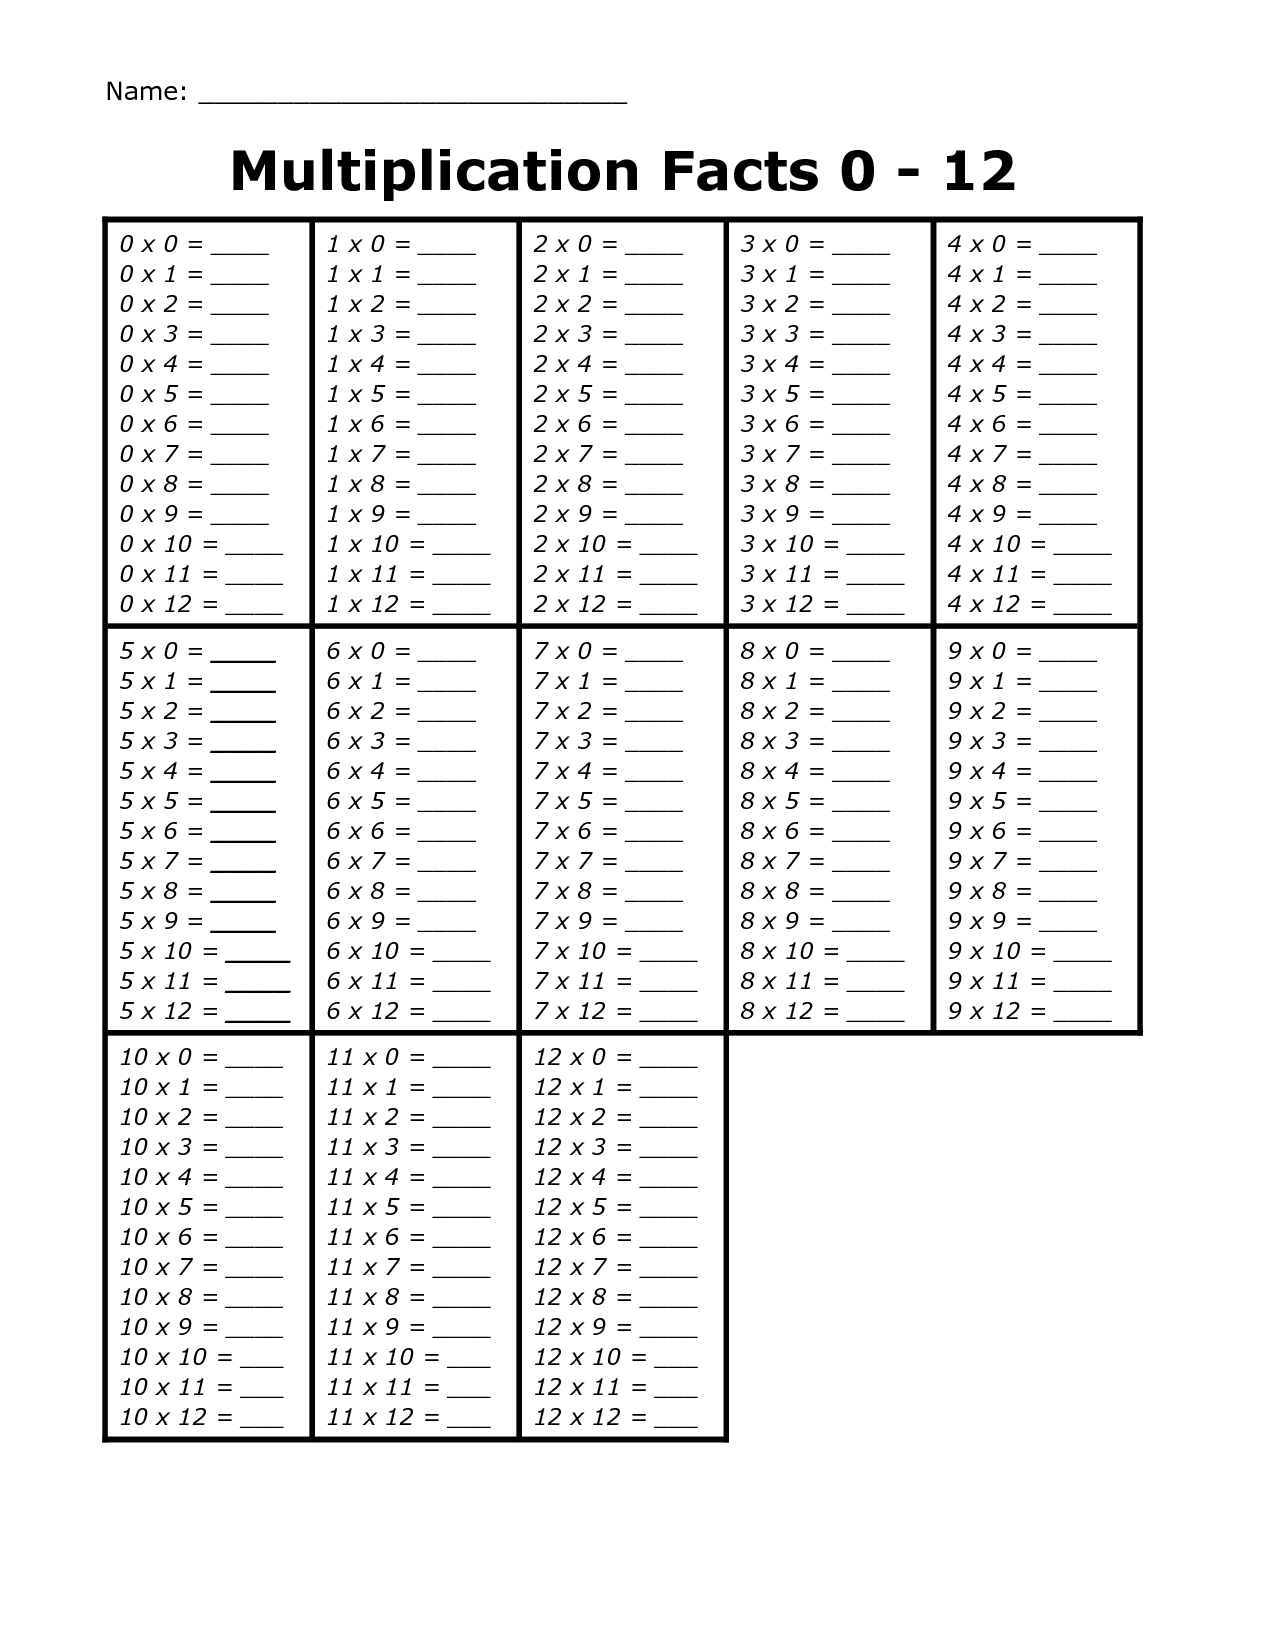 printable-blank-multiplication-table-0-12-printablemultiplication